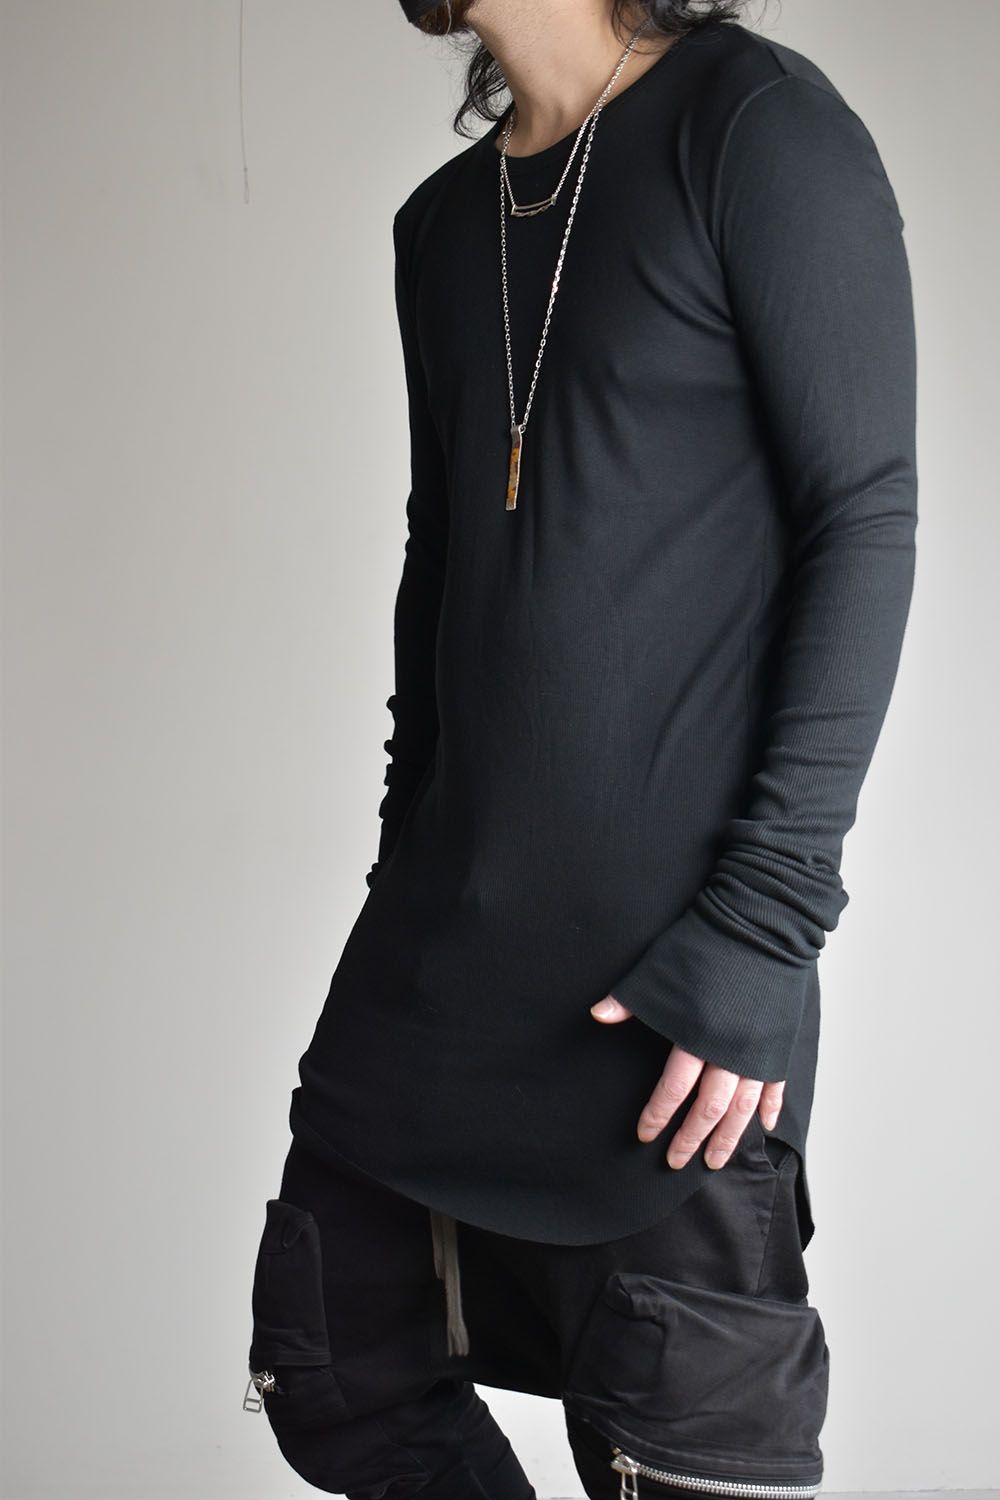 Modal & Cotton Rib Teleco Long Sleeve T Shirt "Black"モダール×コットンリブテレコロングスリーブTシャツ"ブラック"